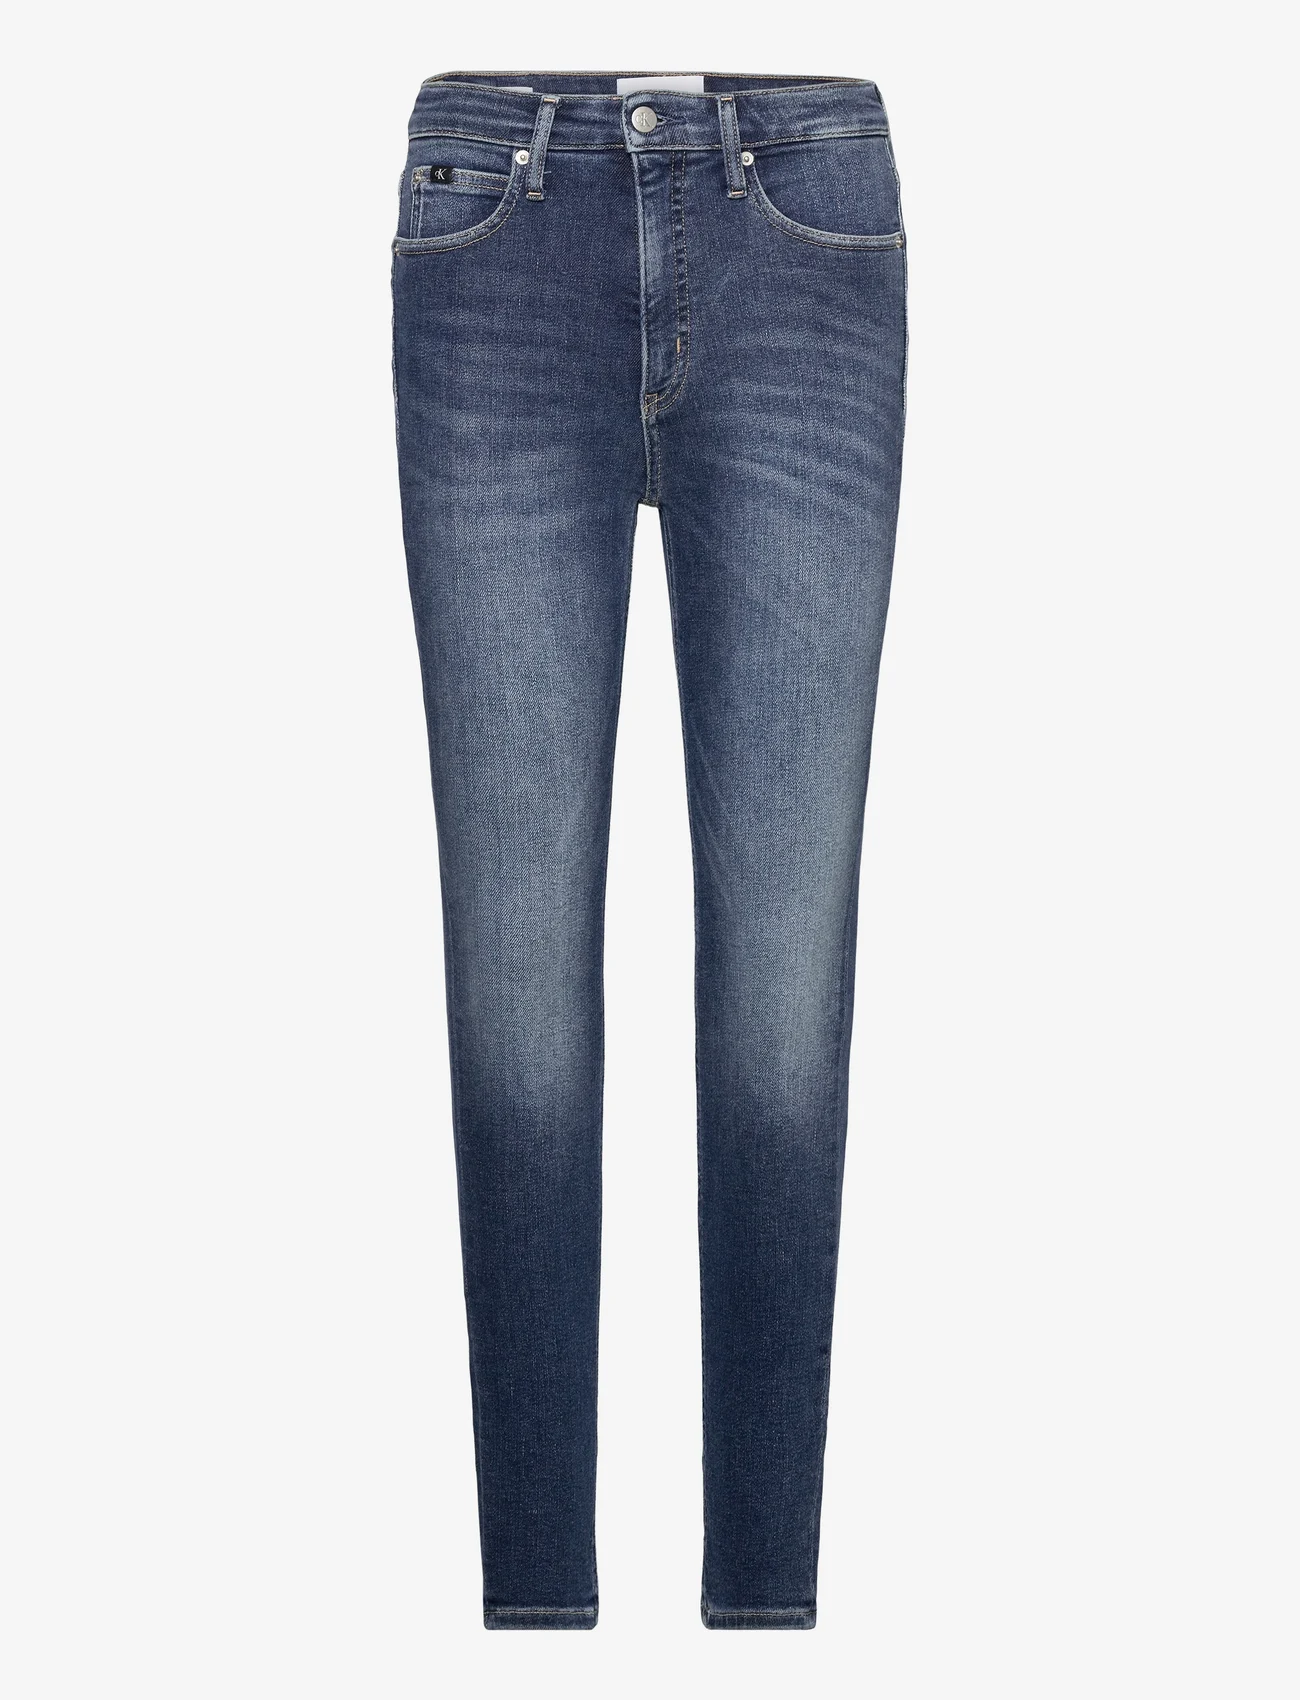 Calvin Klein Jeans - HIGH RISE SKINNY - siaurėjantys džinsai - denim dark - 0